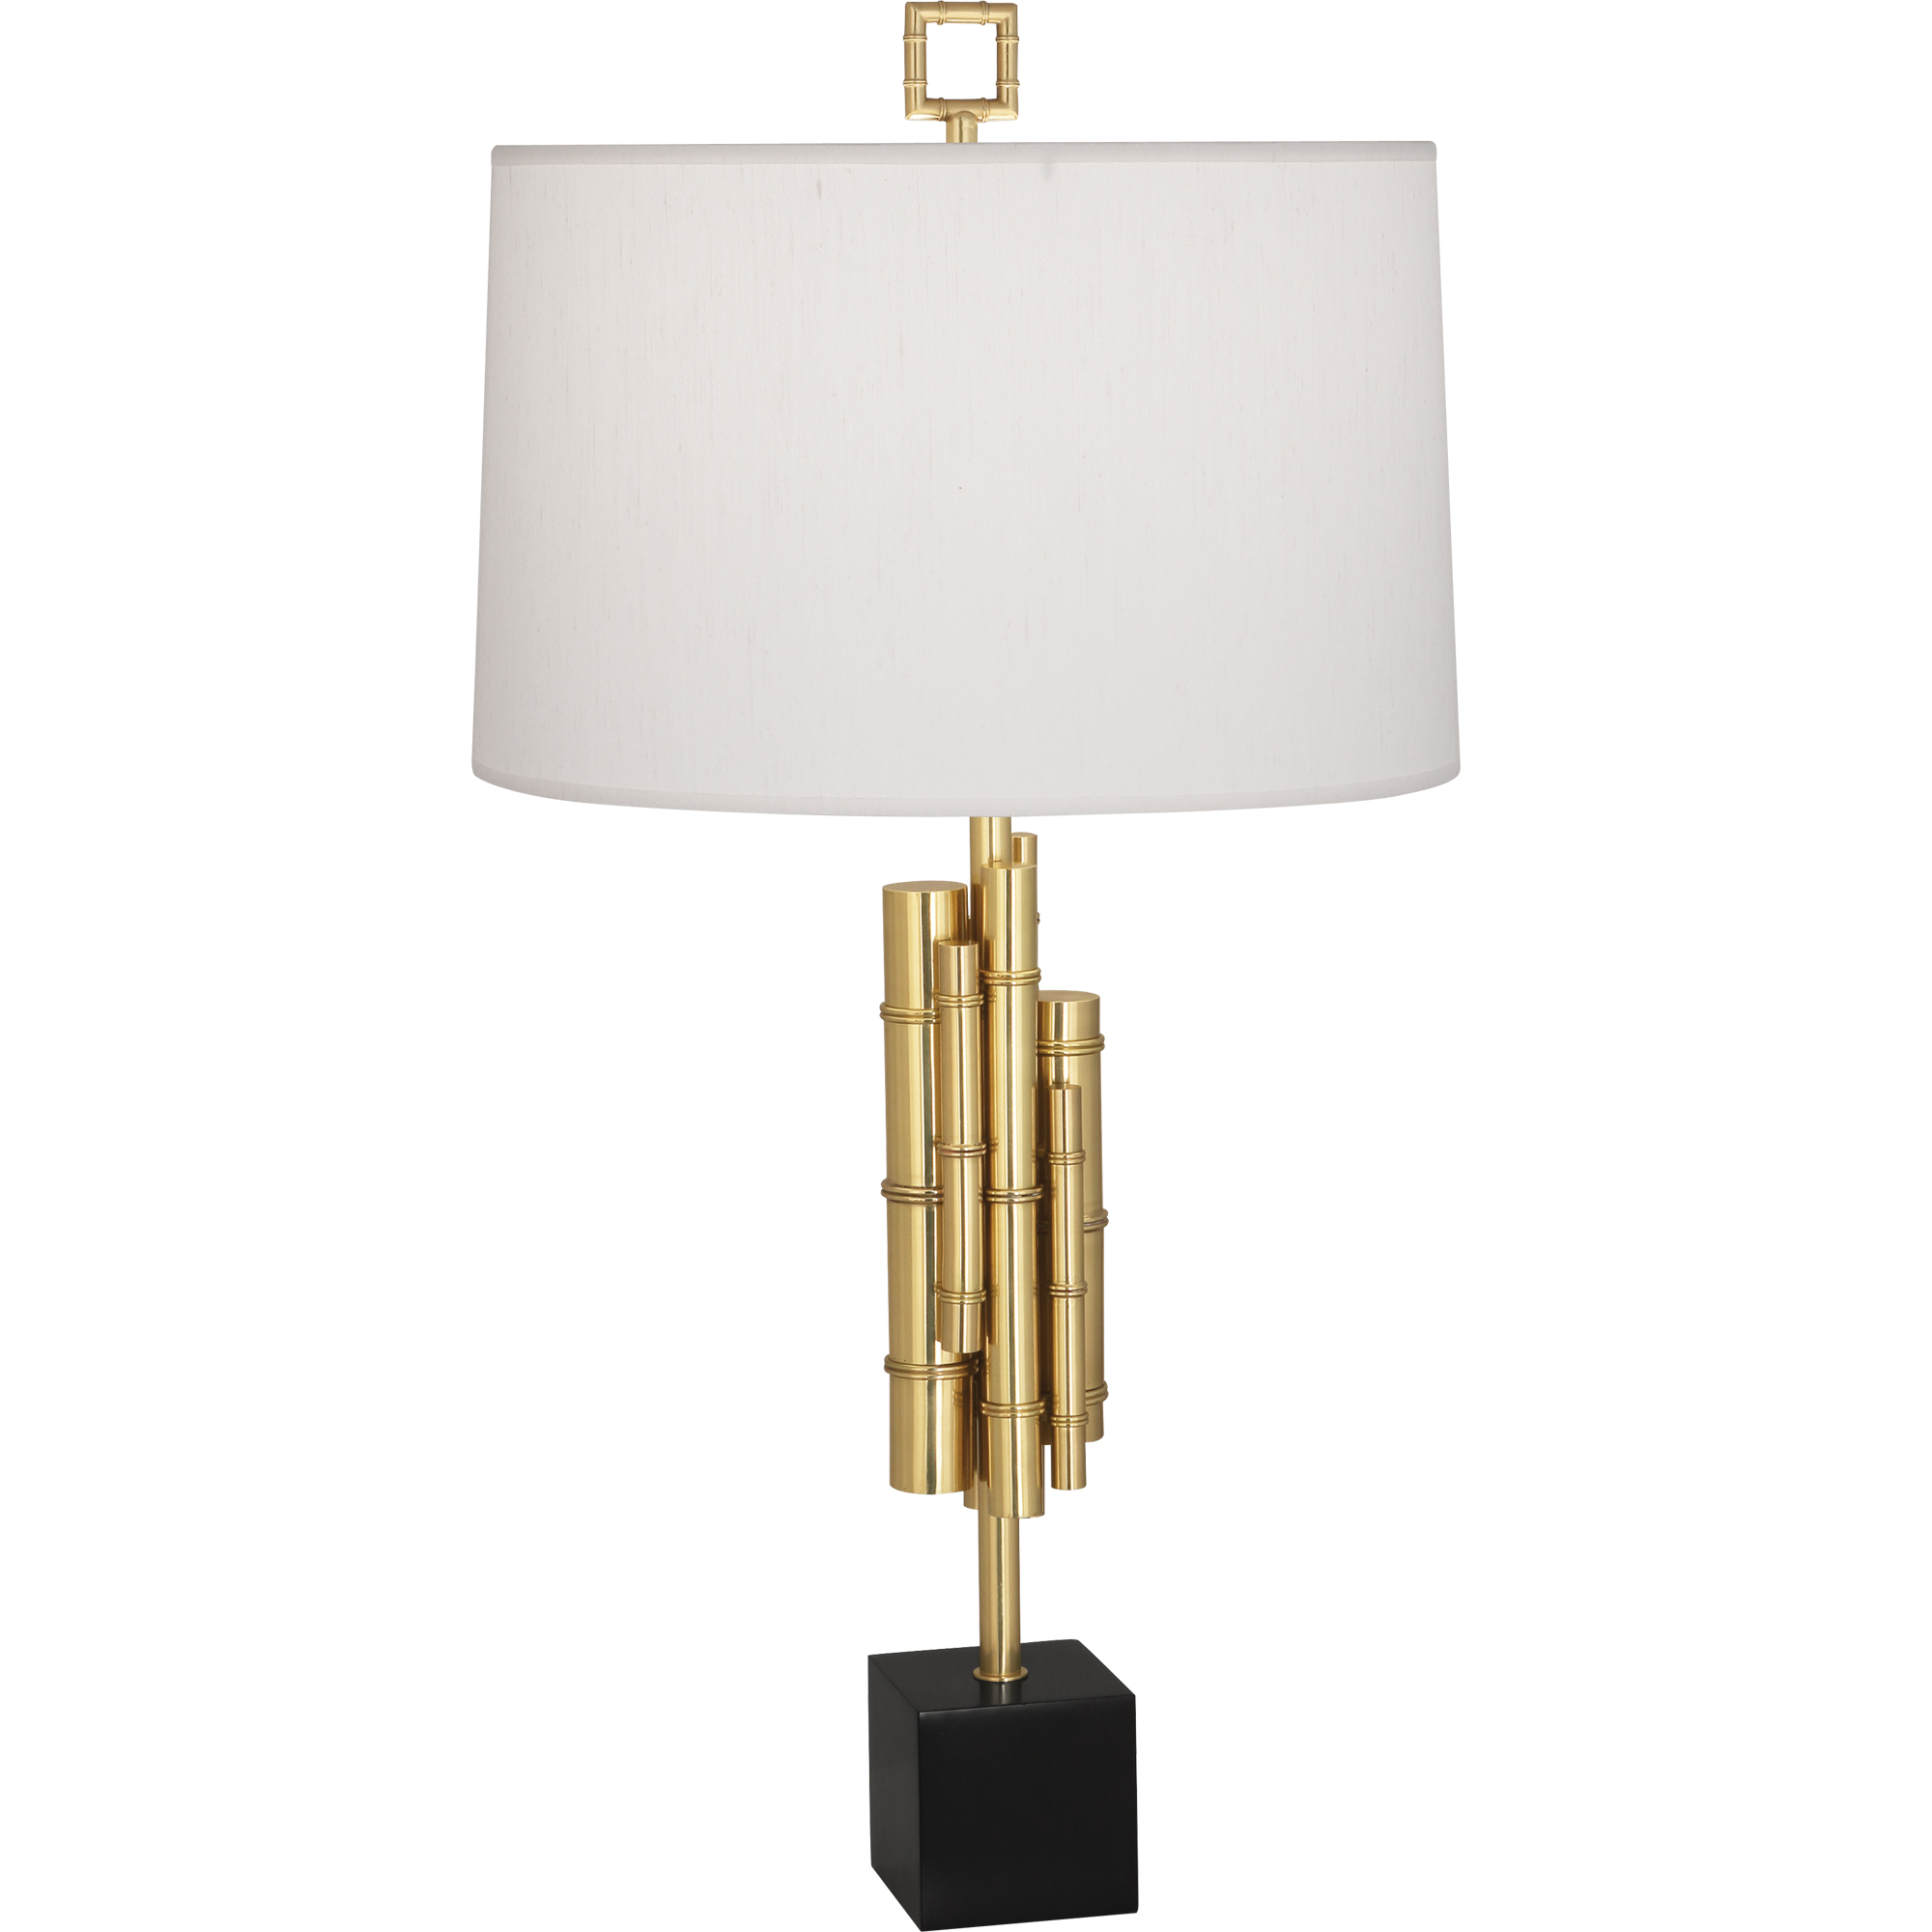 Jonathan Adler Meurice Table Lamp Style #634